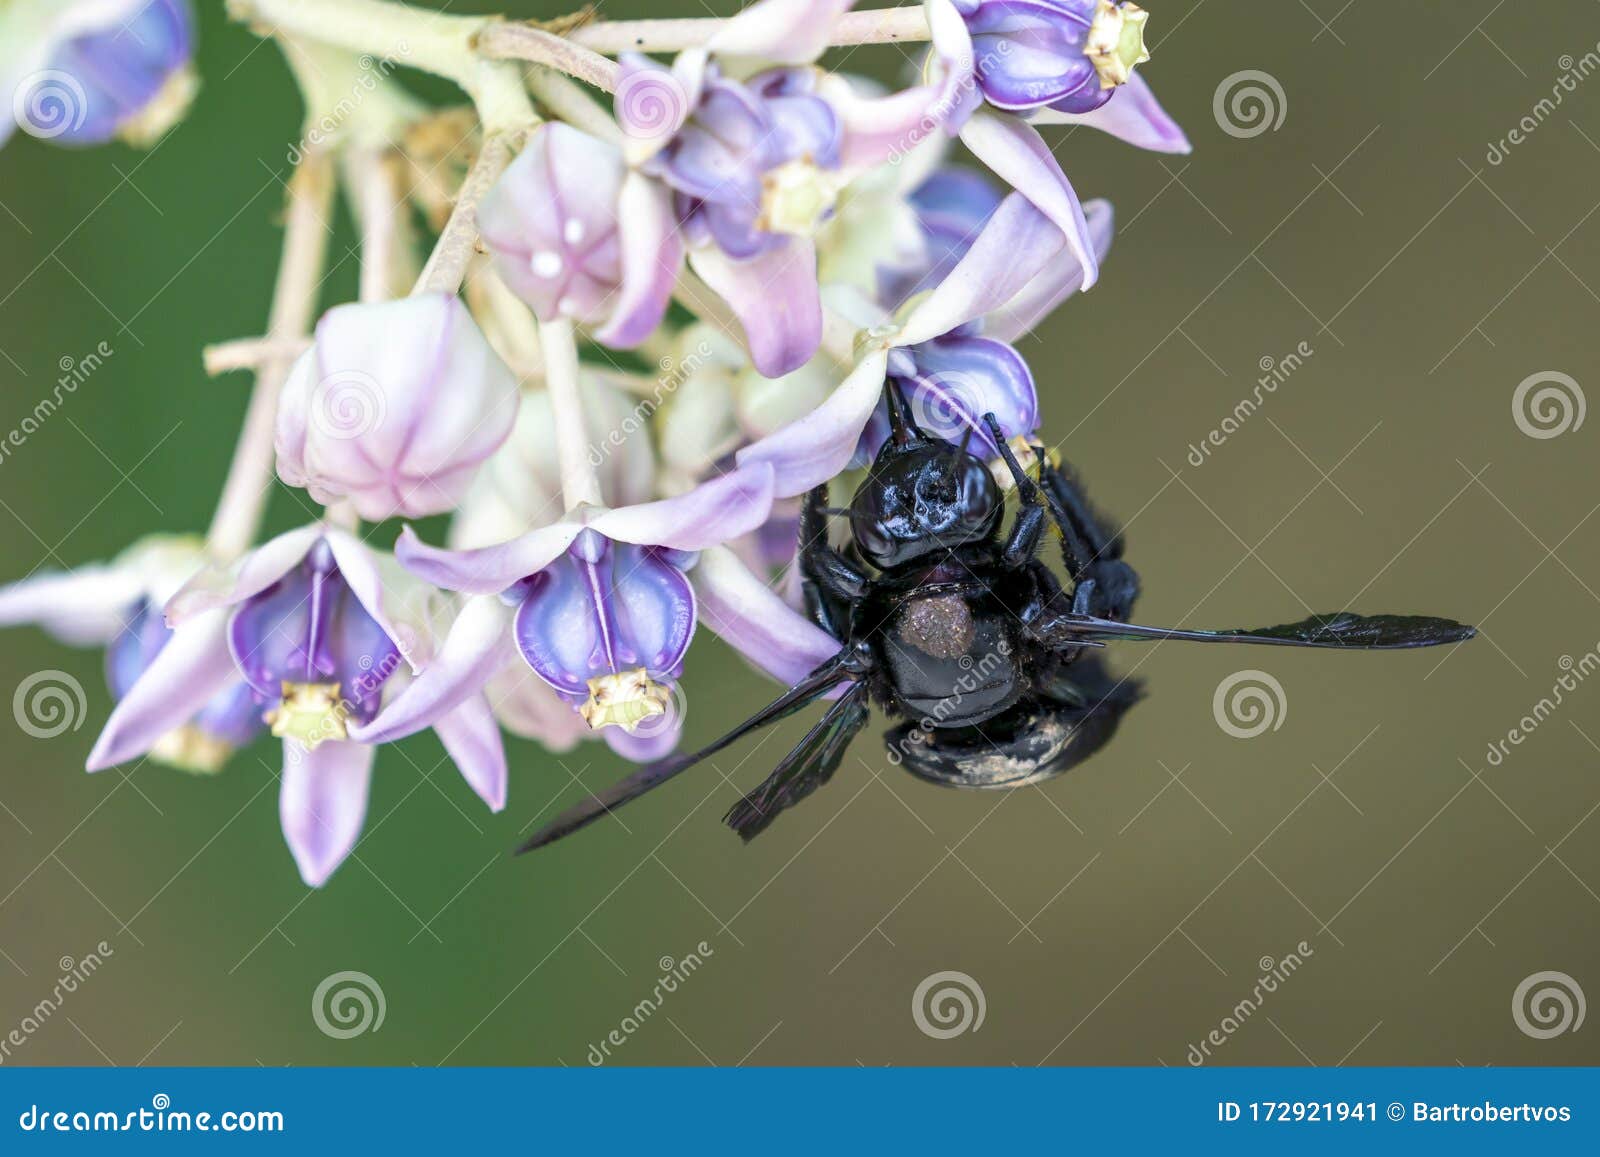 a black carpenter bee in bali on a flower